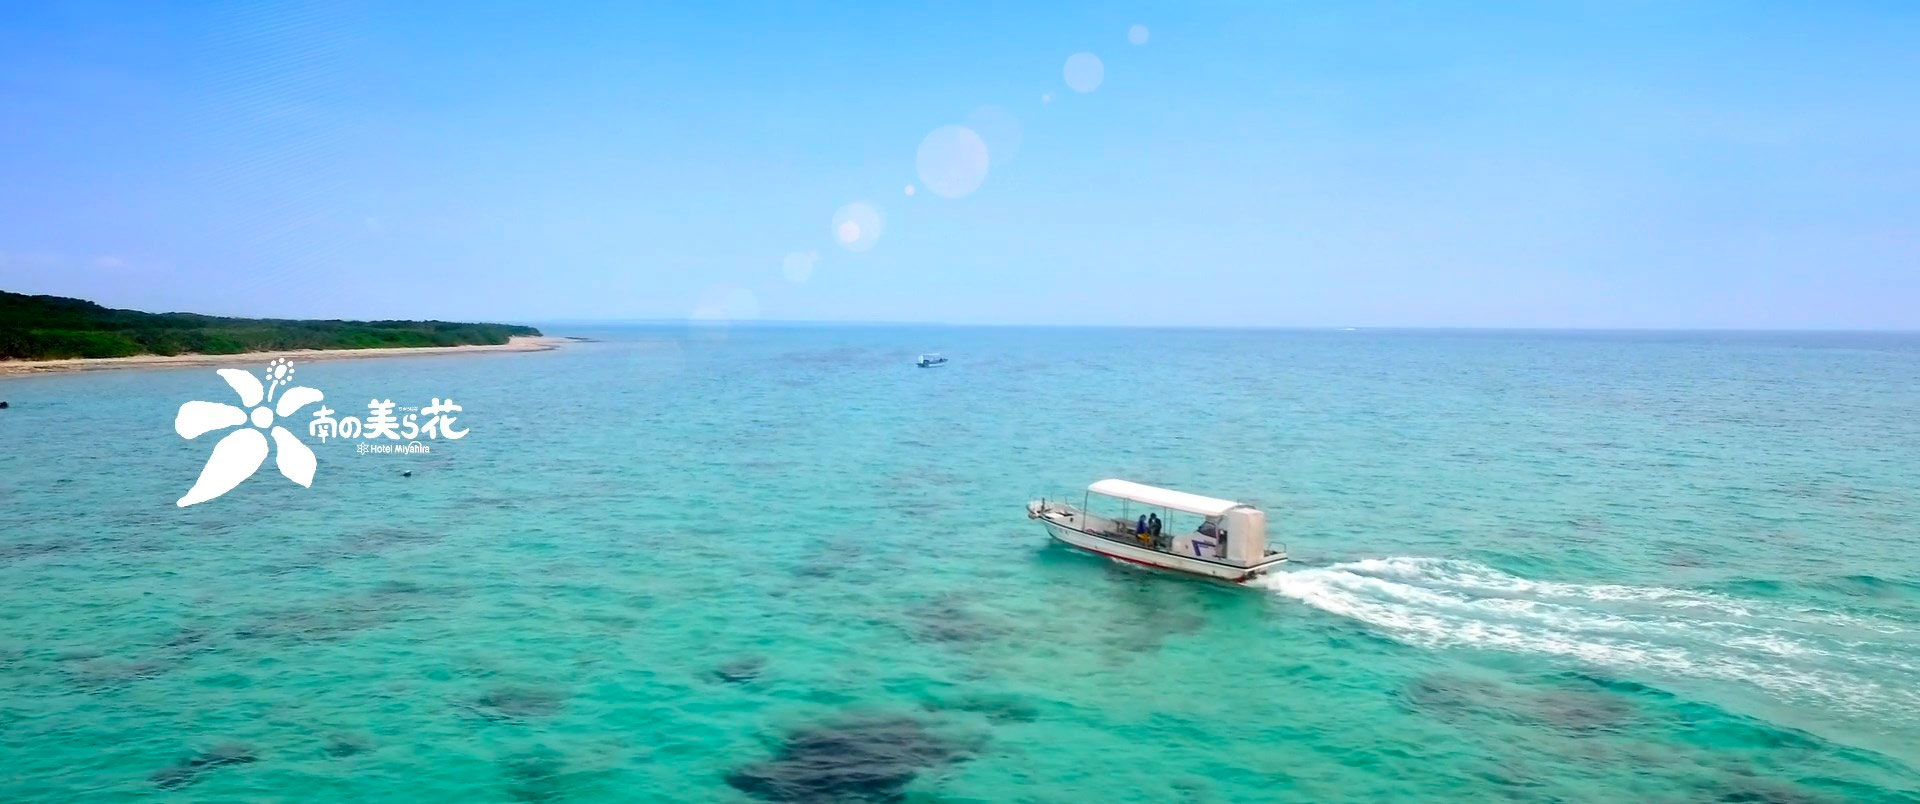 People on a boat in the ocean near Hotel Miyahira in Ishigaki, Okinawa, Japan